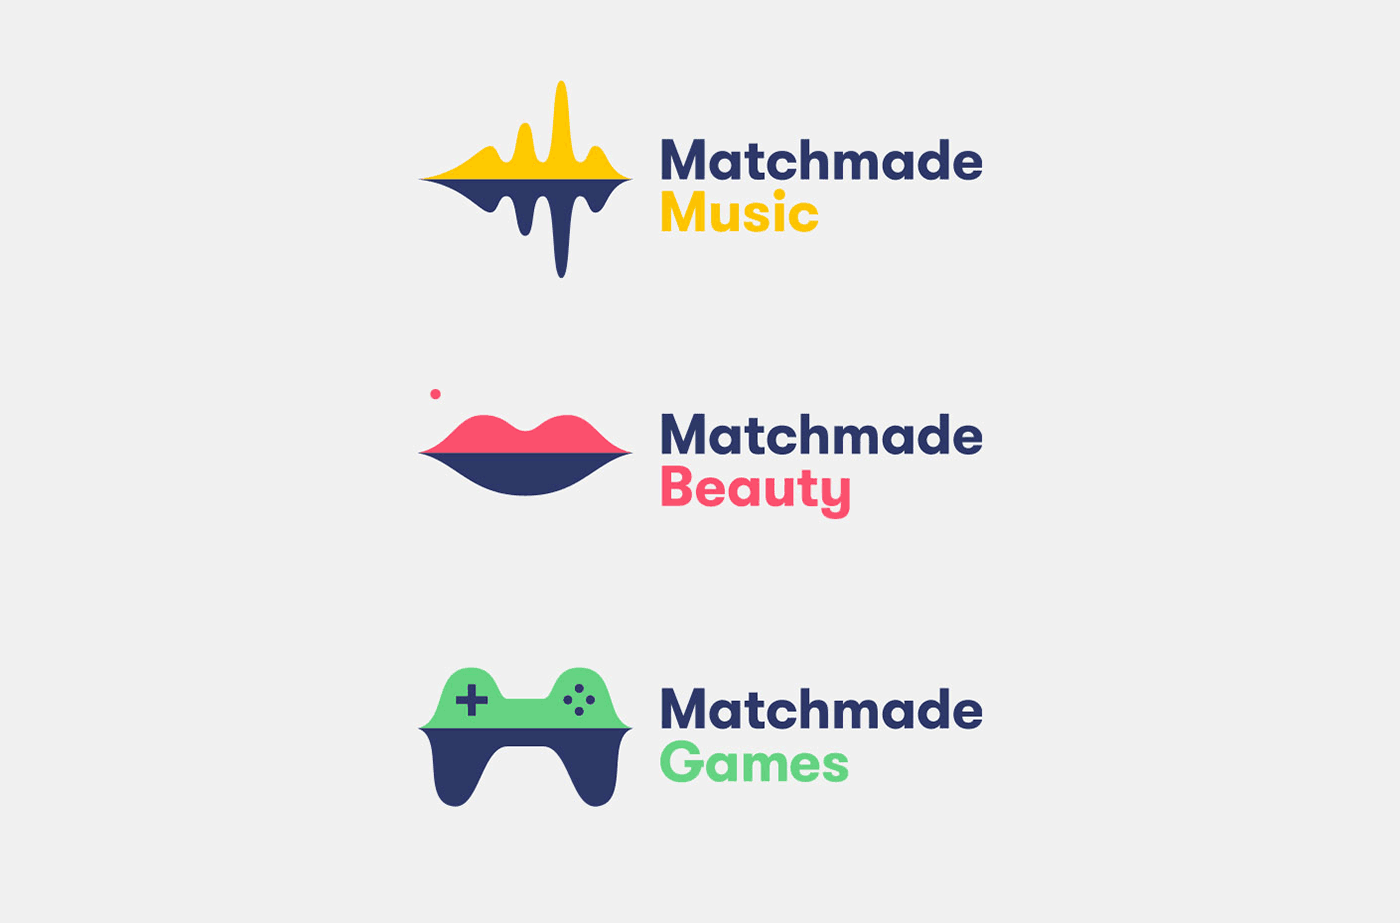 matchmade logos by upstruct and muskat